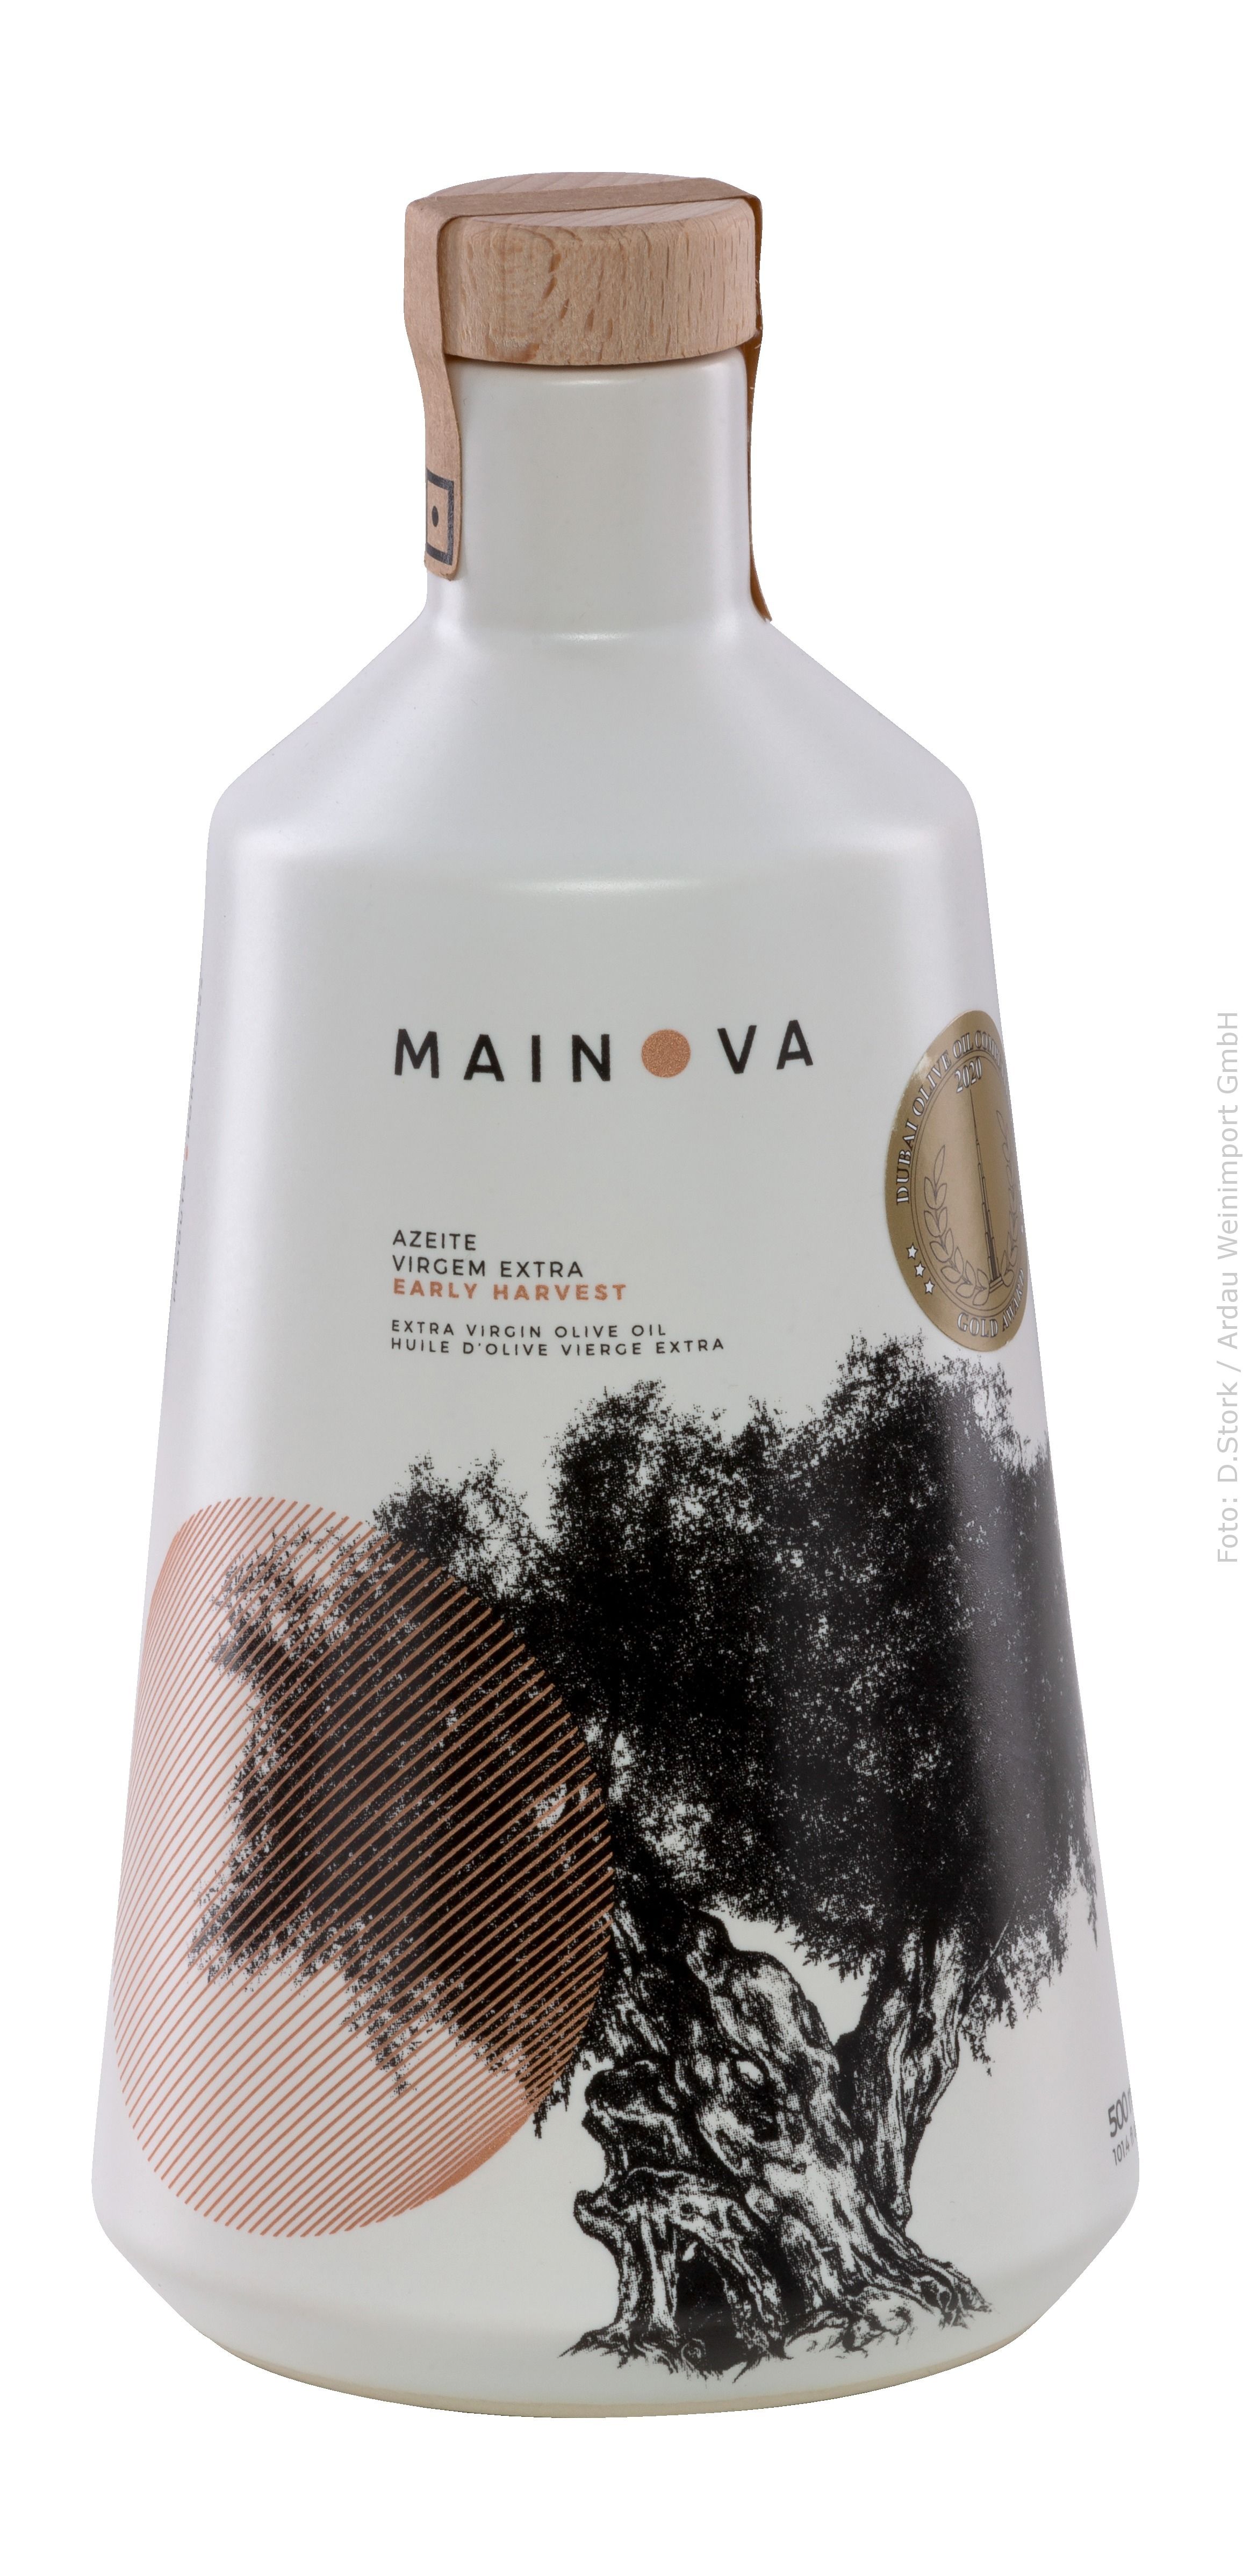 Mainova Azeite Virgin Extra Early Harvest 0,5L Portugal